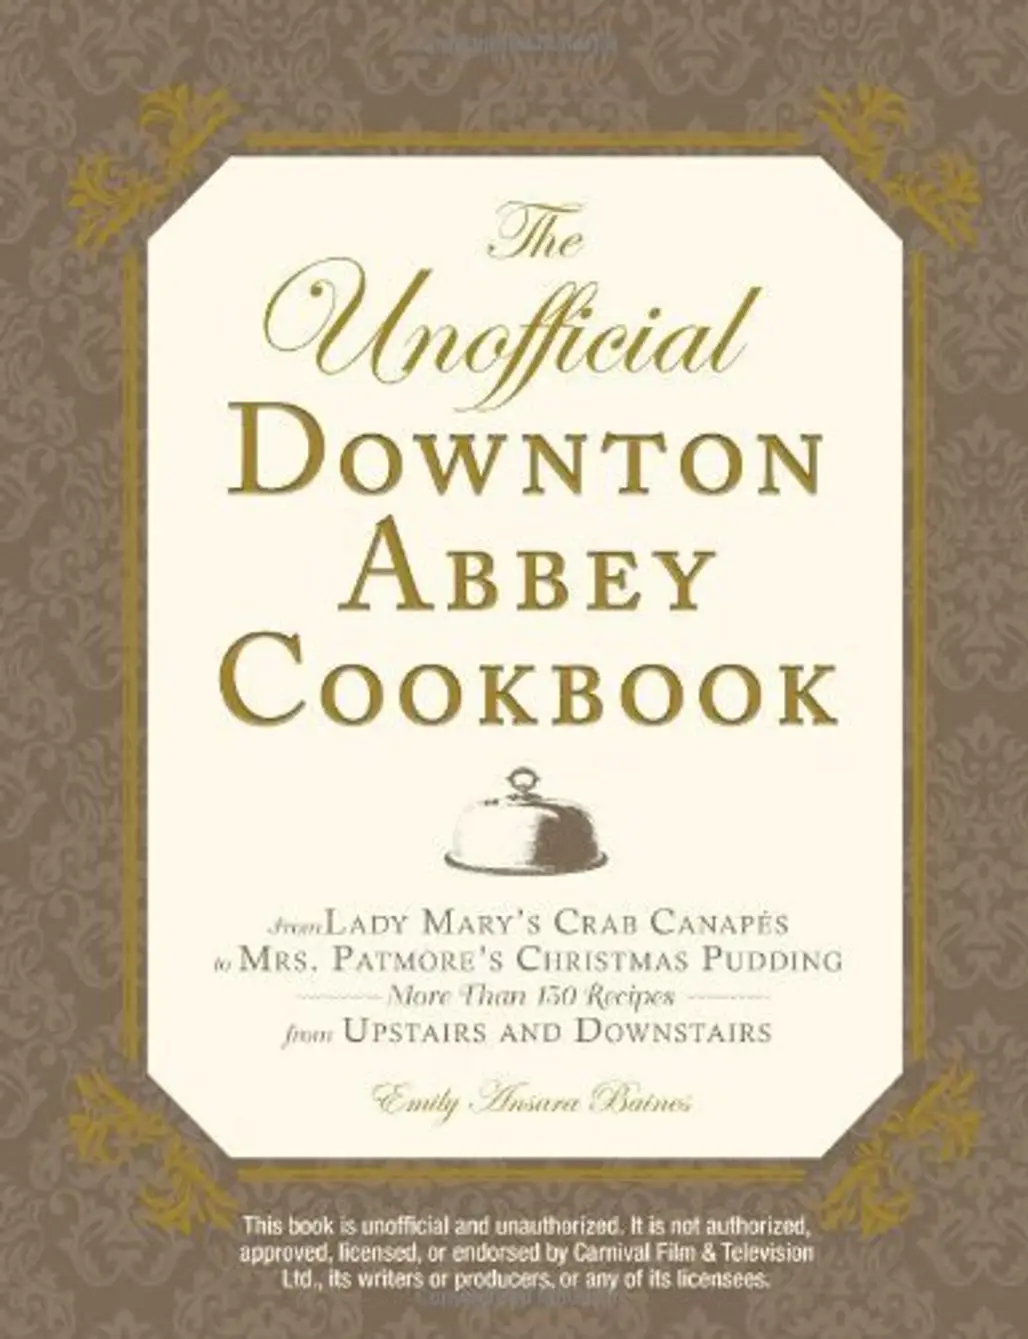 The Downton Abbey Cookbook